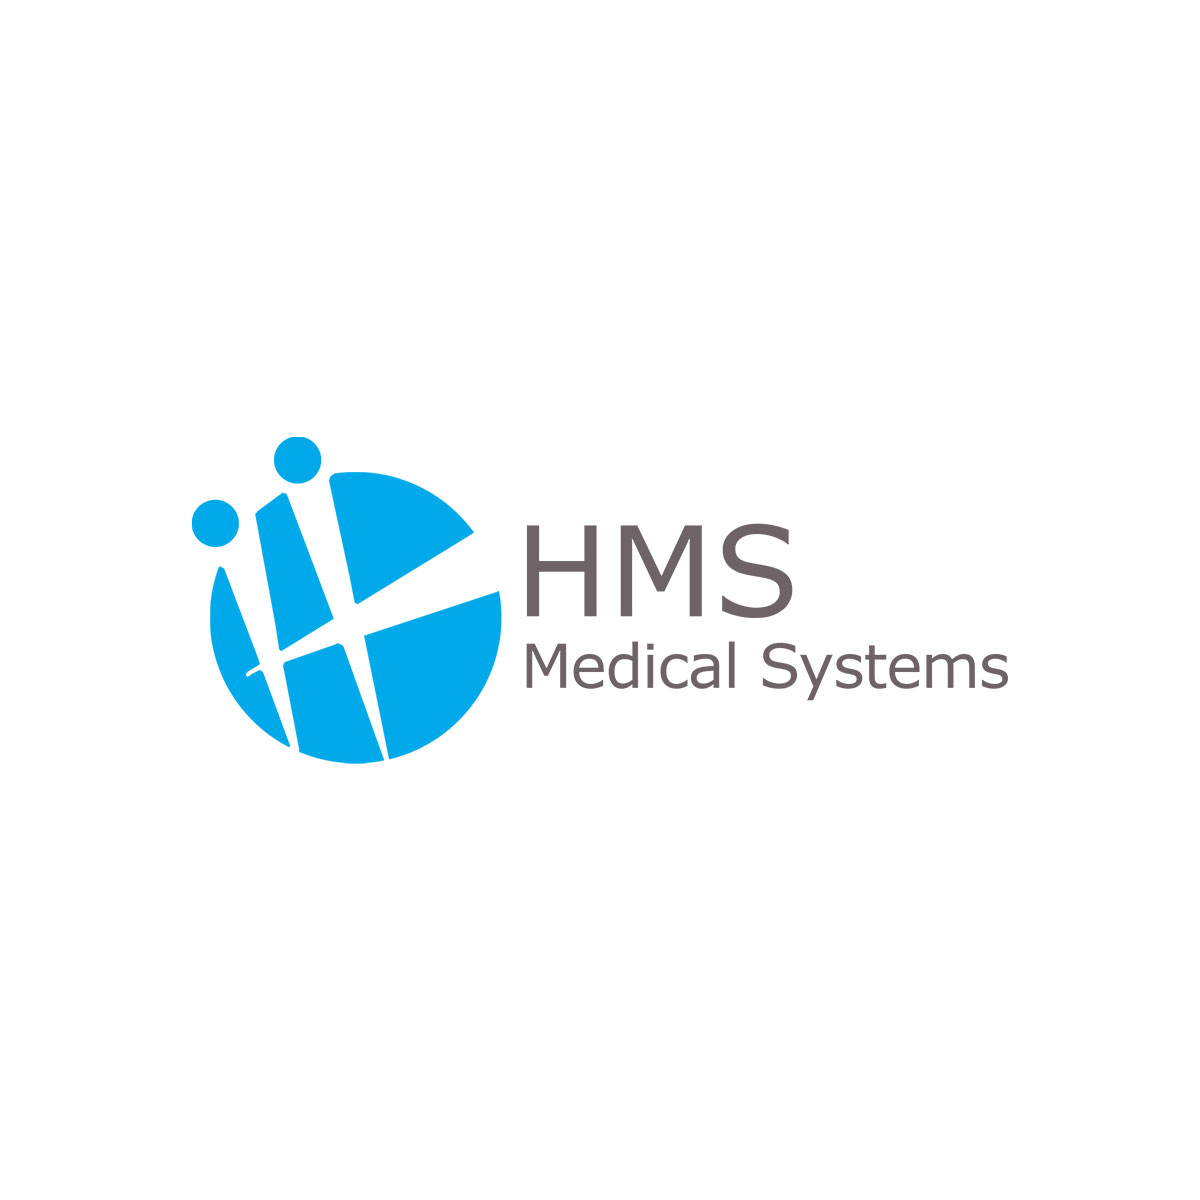 HMS Medical Systems Logo